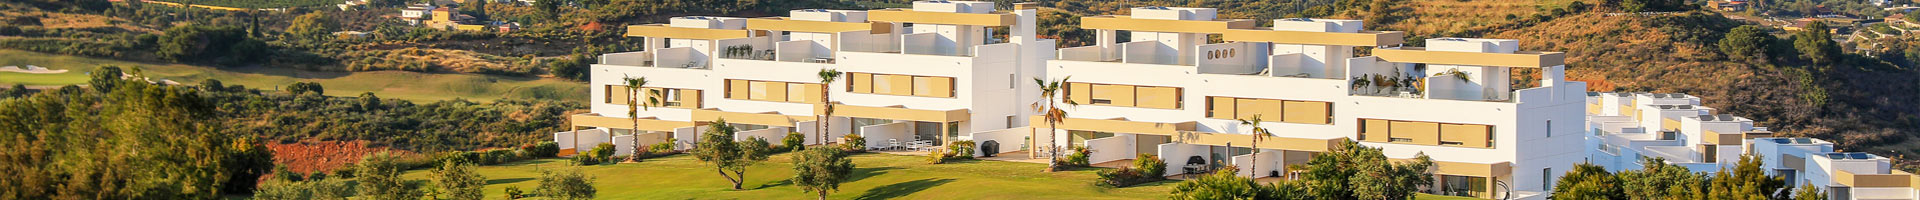 La Cala Resort - Mijas, Spain